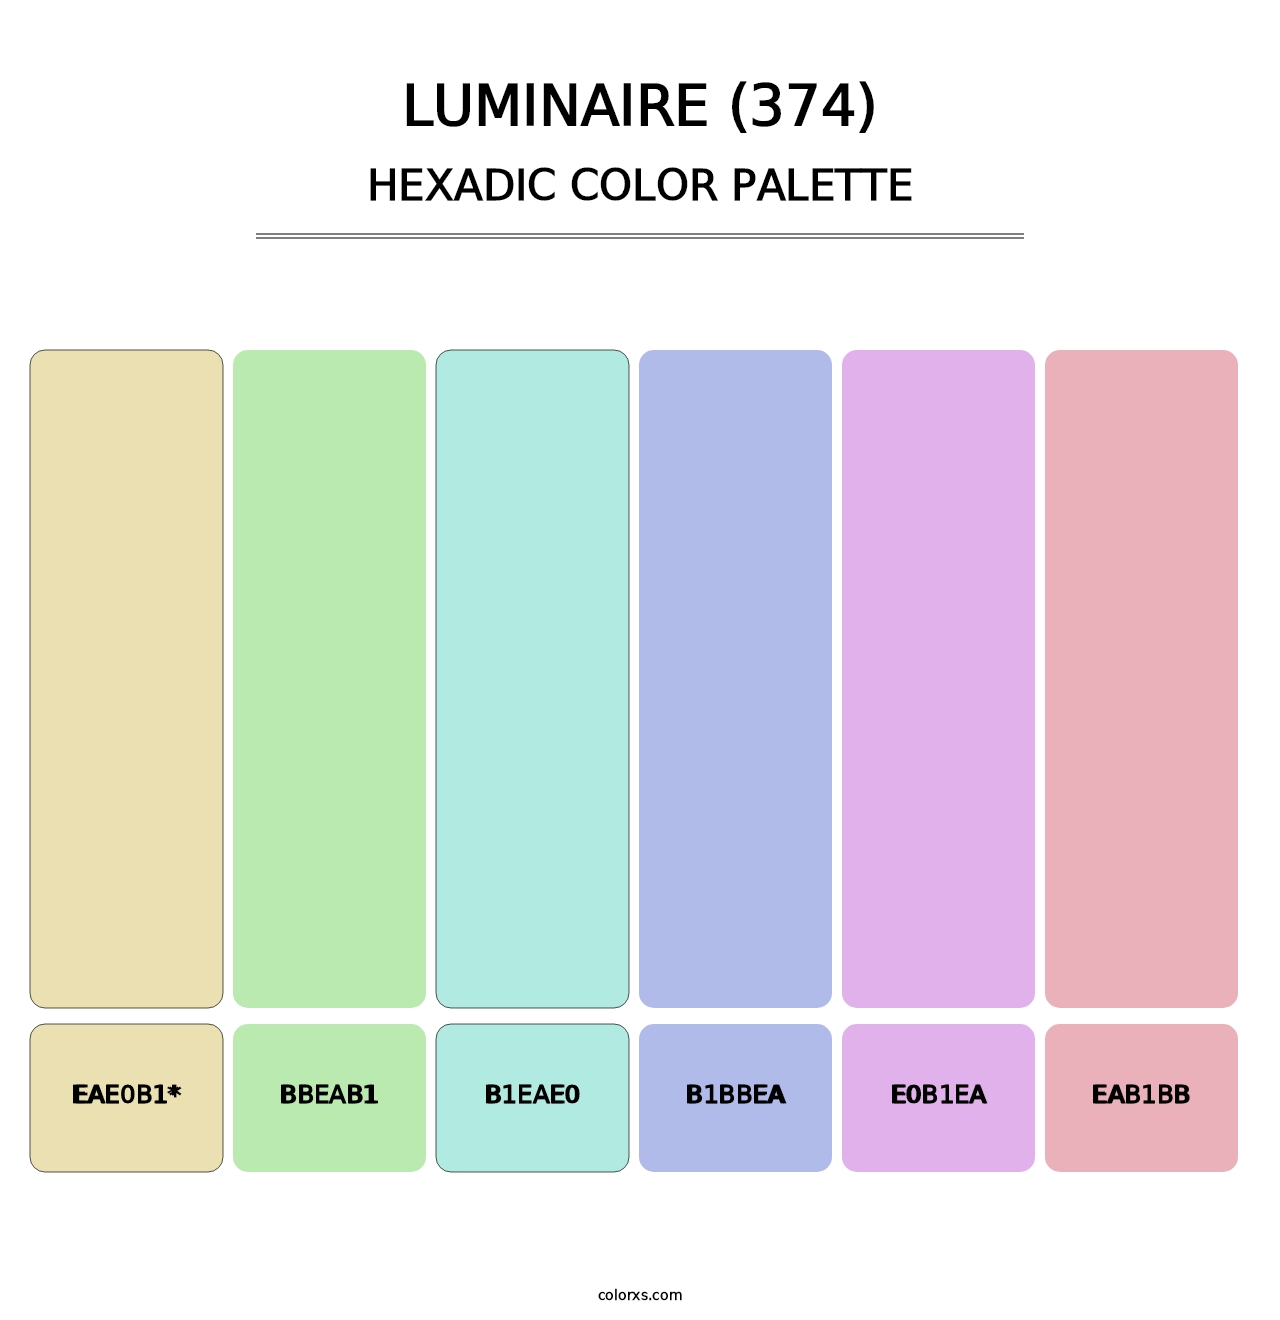 Luminaire (374) - Hexadic Color Palette